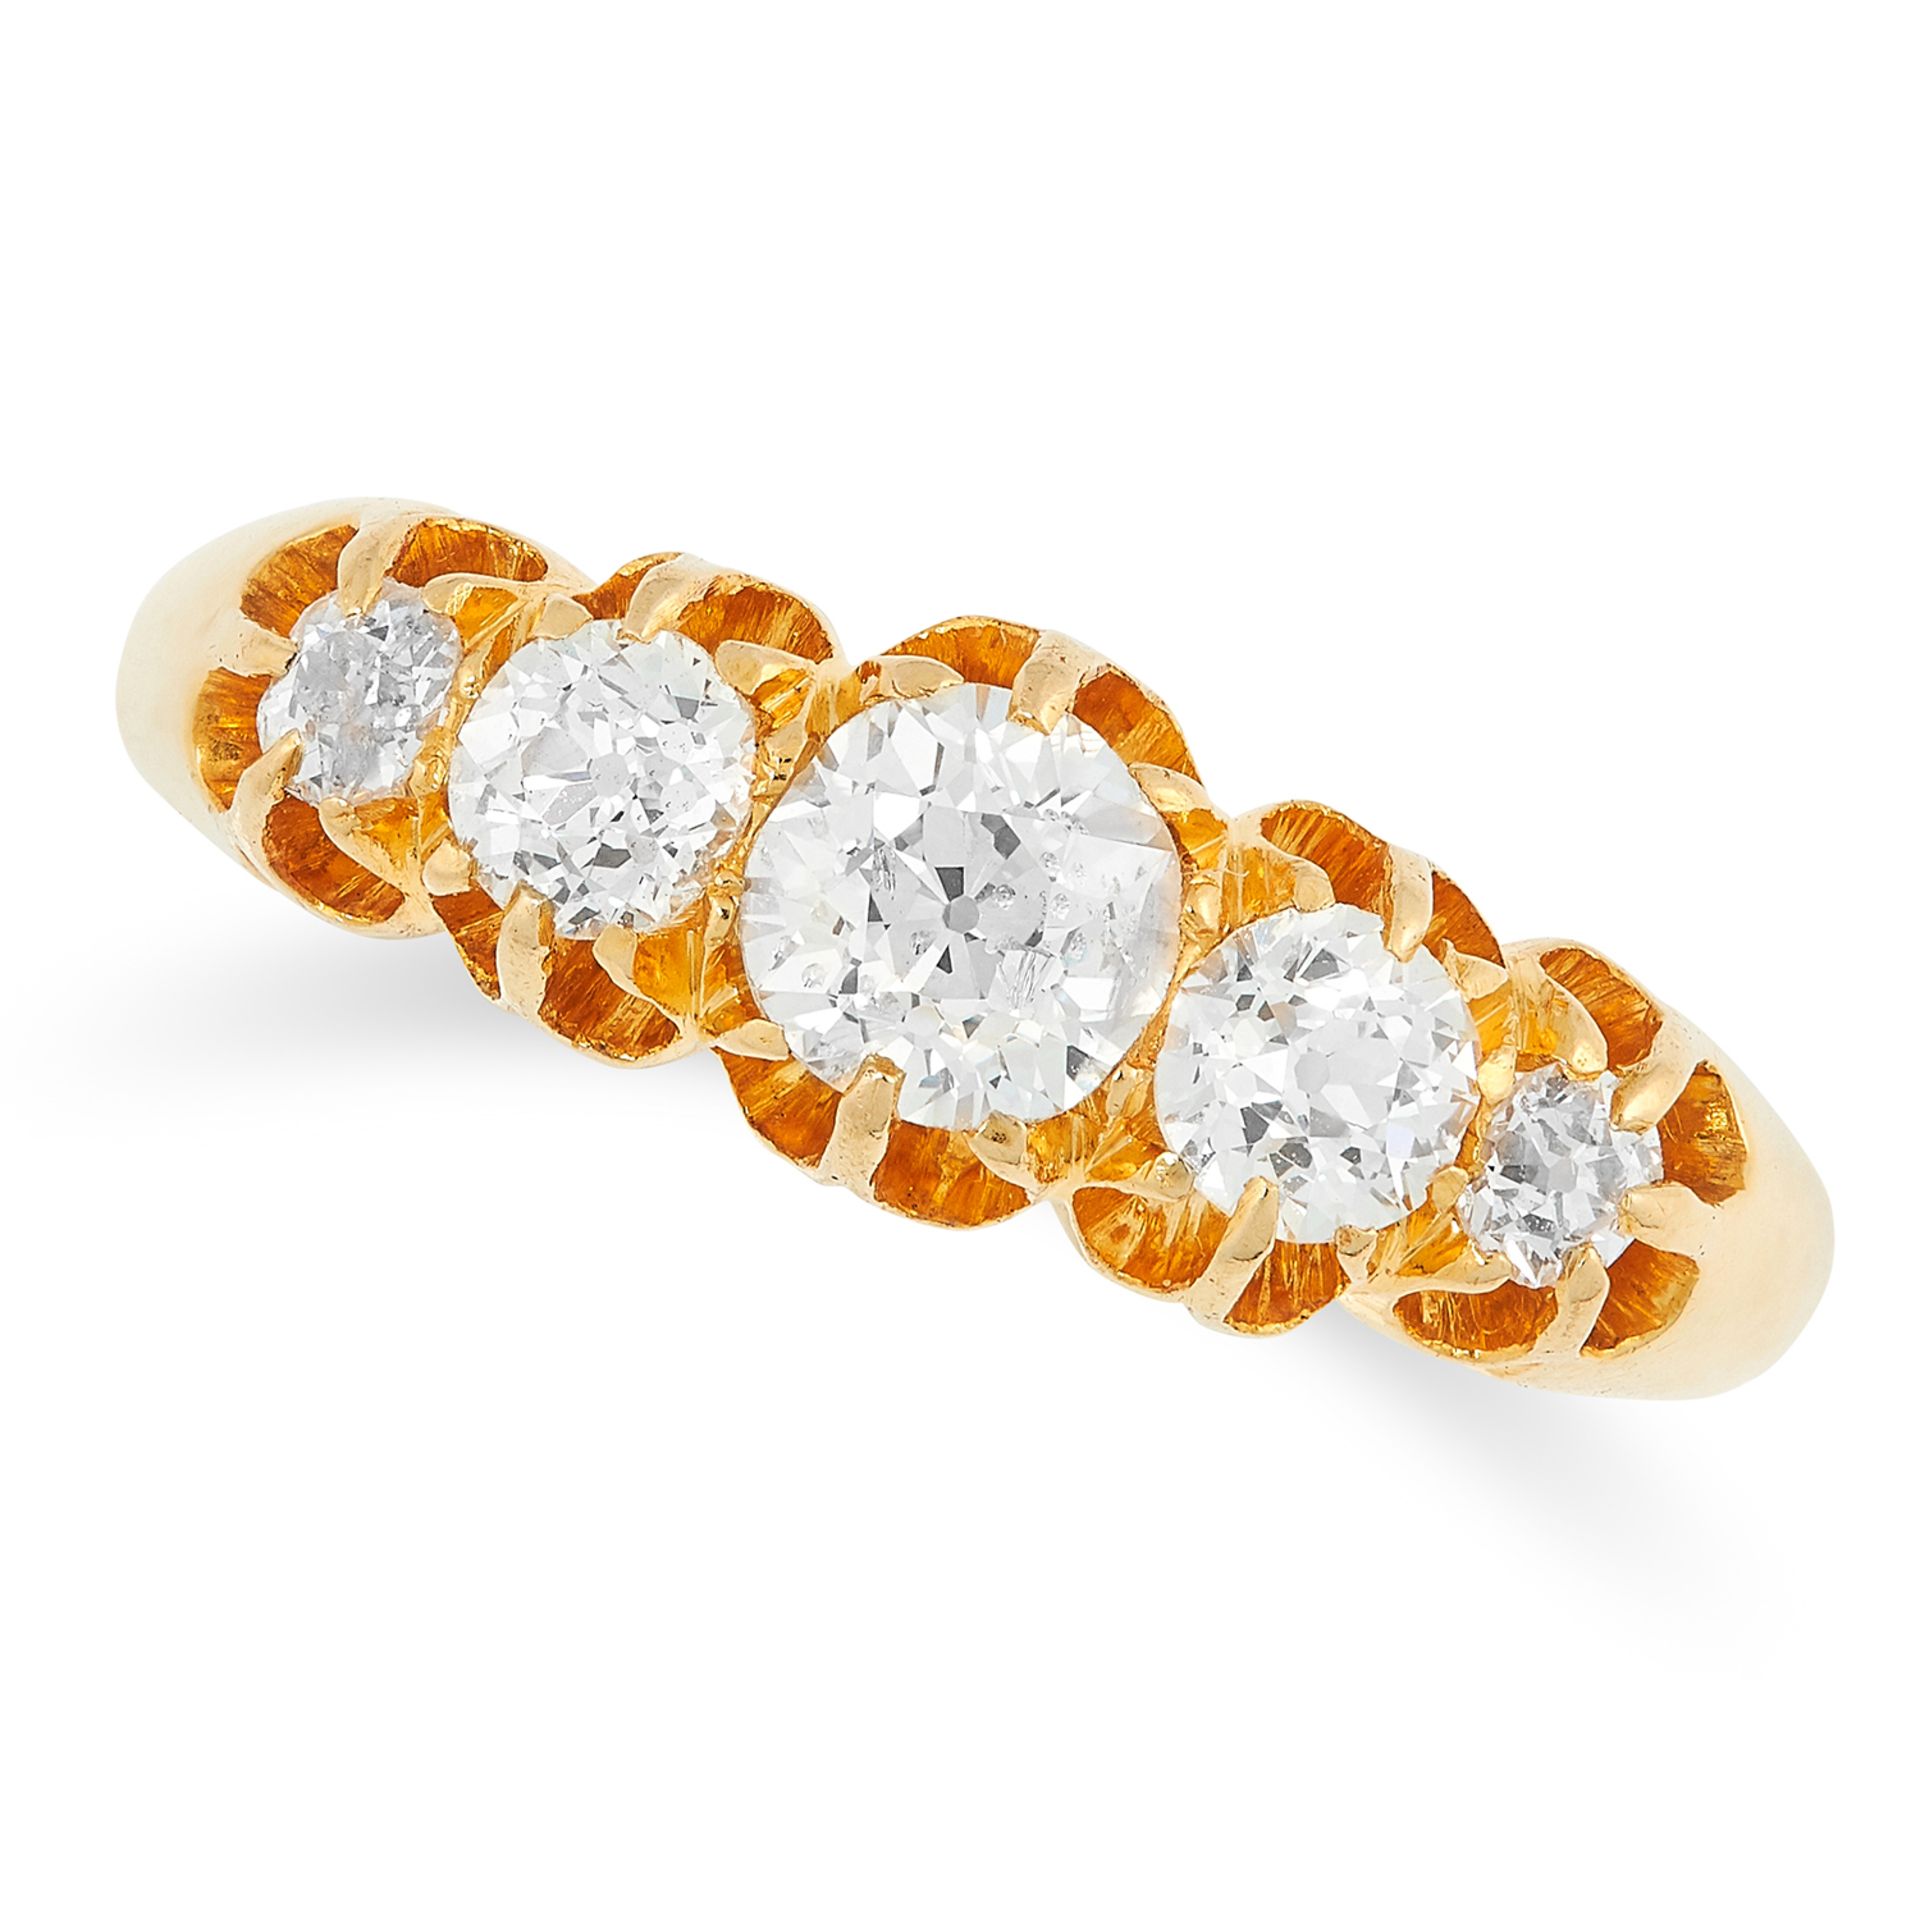 ANTIQUE DIAMOND FIVE STONE RING set with old cut diamonds, British hallmarks, size P / 7.5, 5.2g.